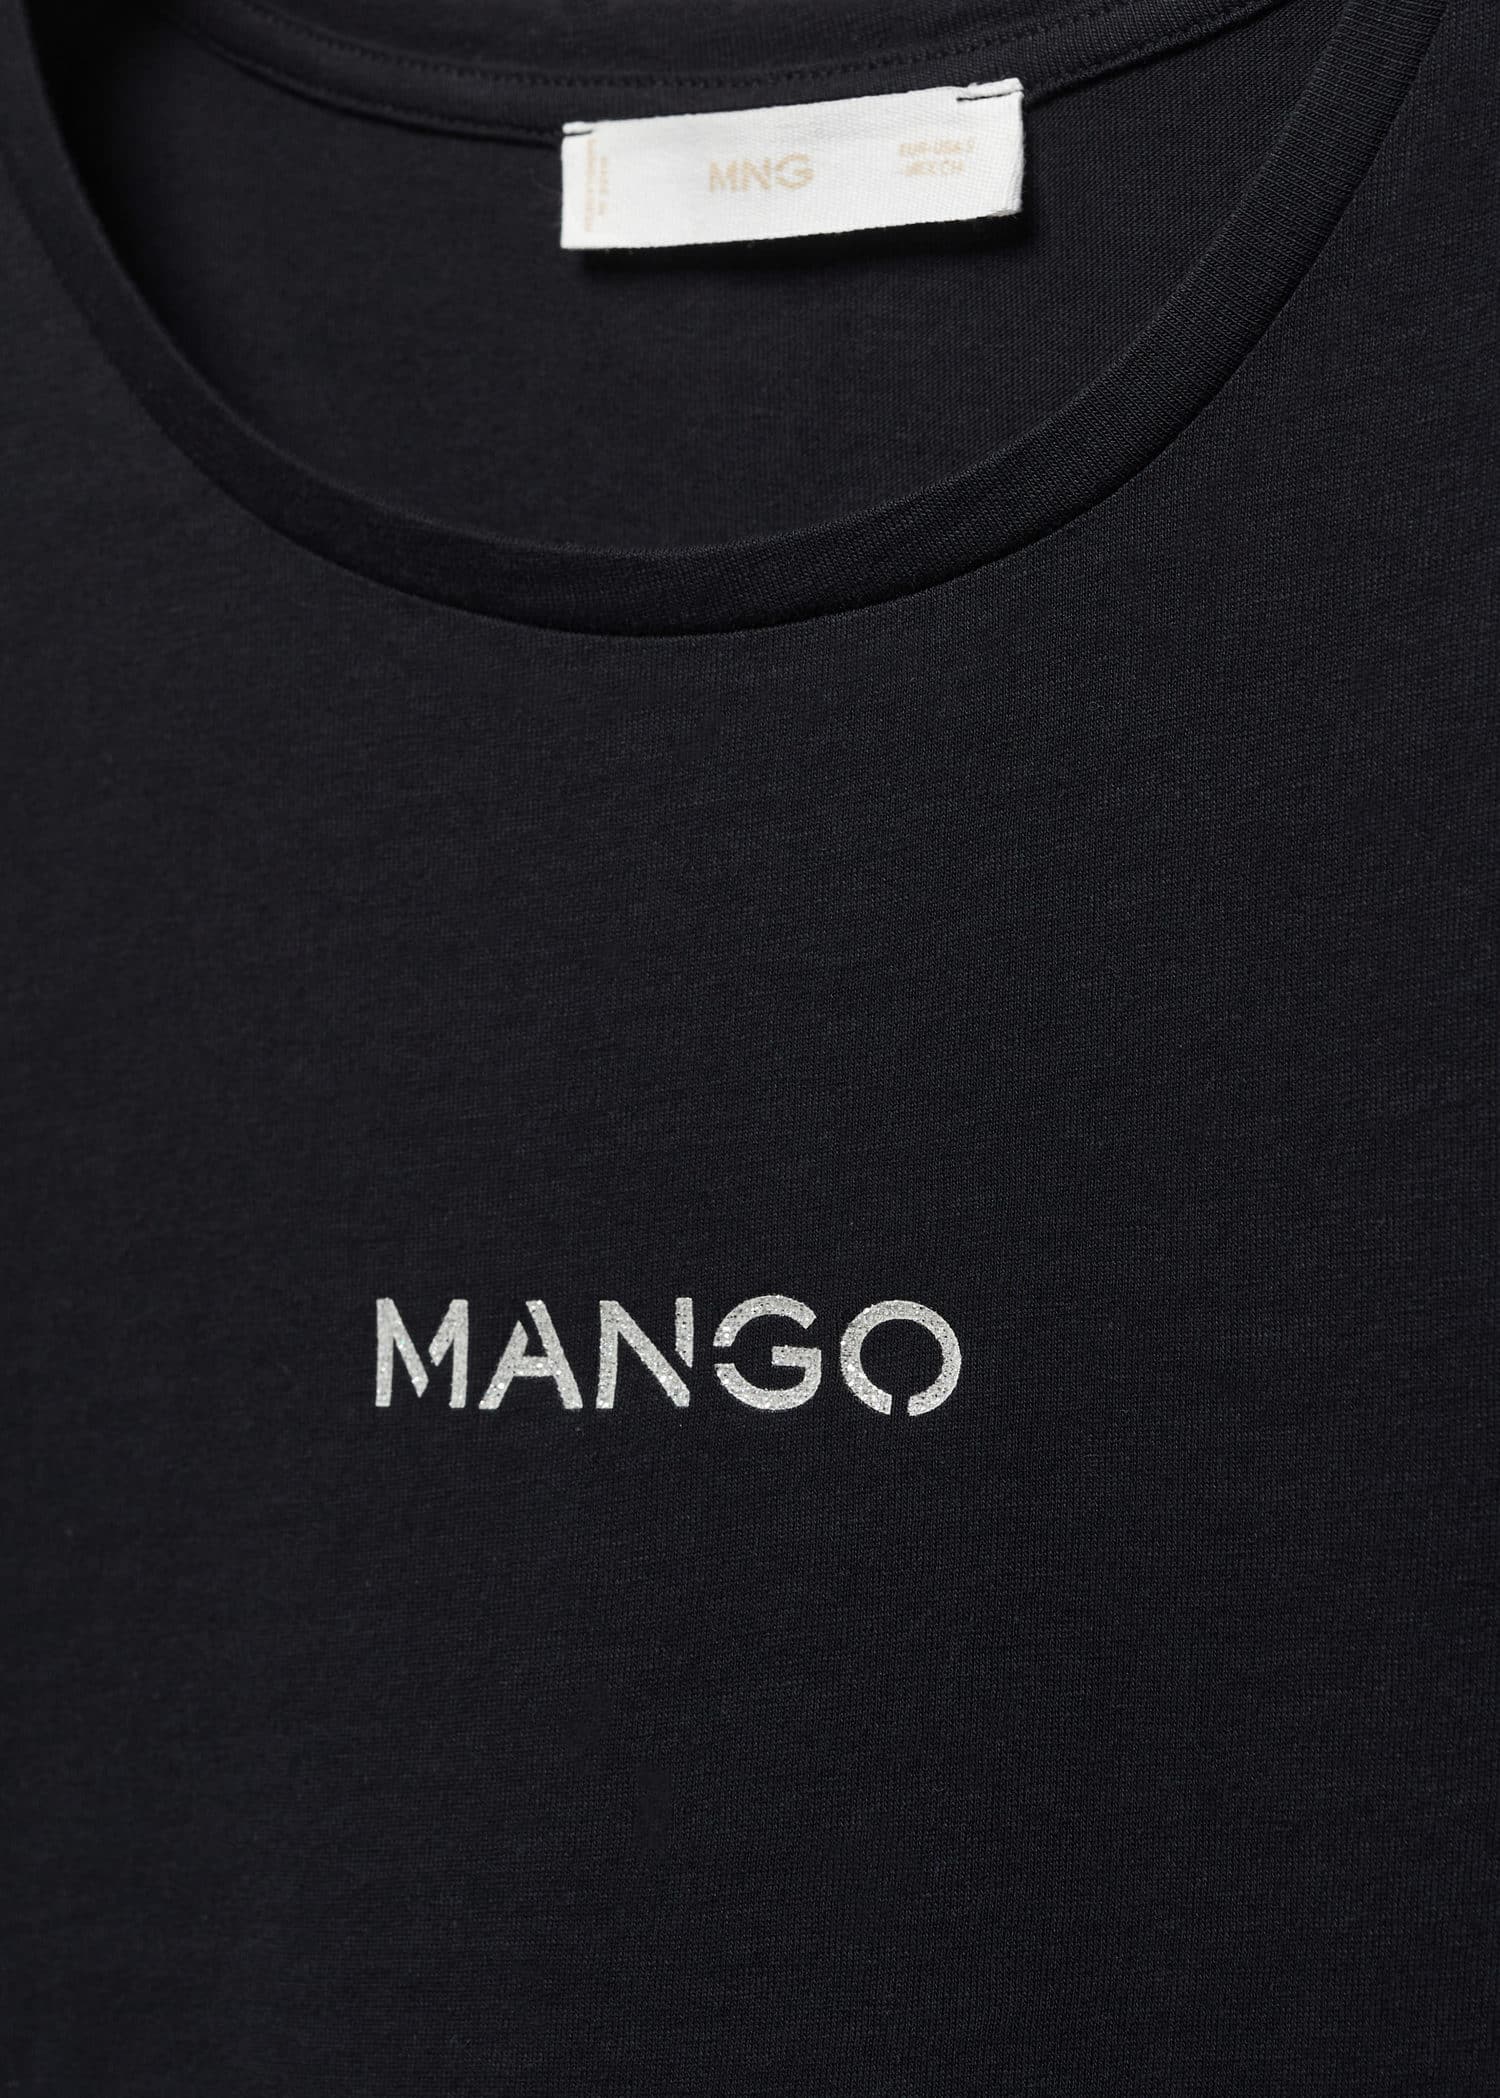 MANGO MANGOLOG-H 67010426-99 MANGO WOMEN T-SHIRT SHORT SLEEVE